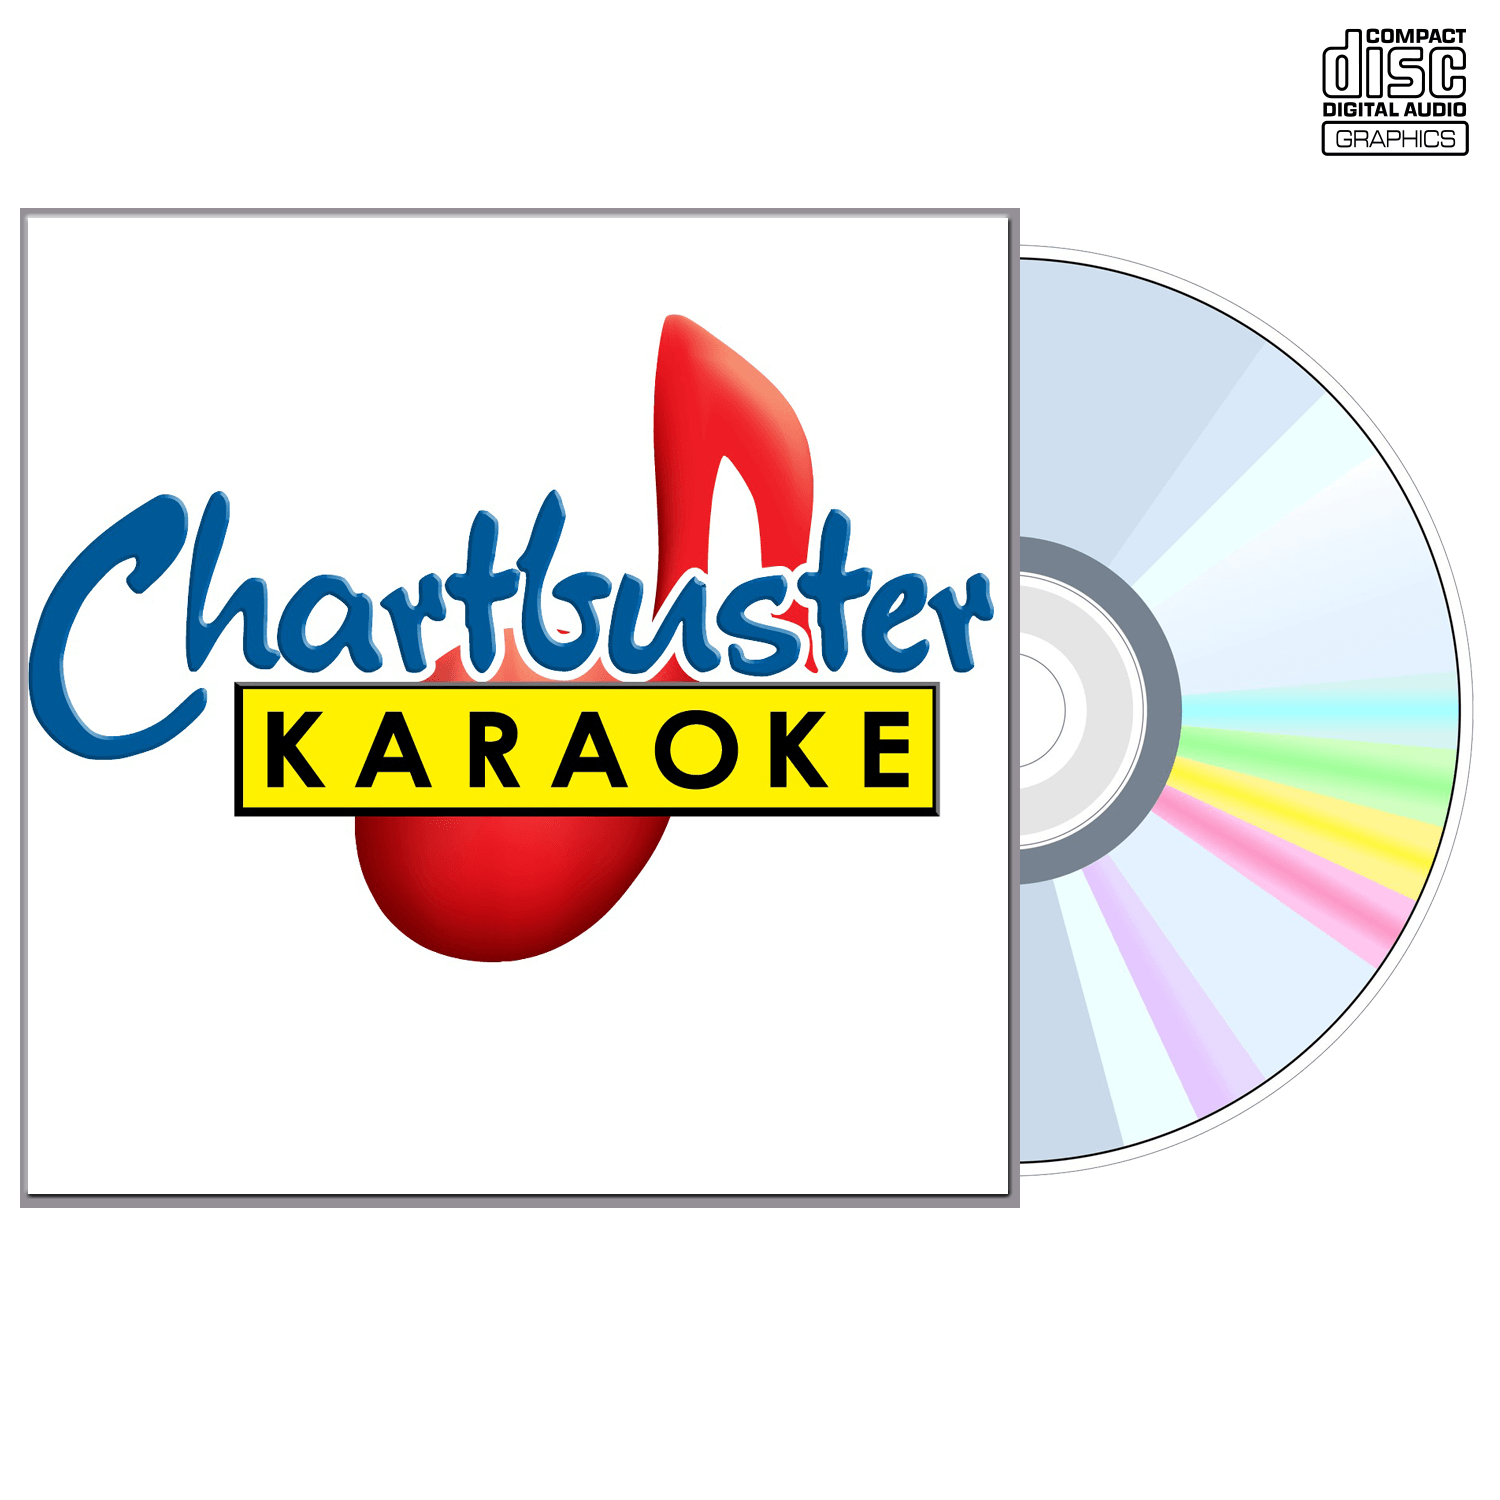 Best Of Johnny Cash - CD+G - Chartbuster Karaoke - Karaoke Home Entertainment